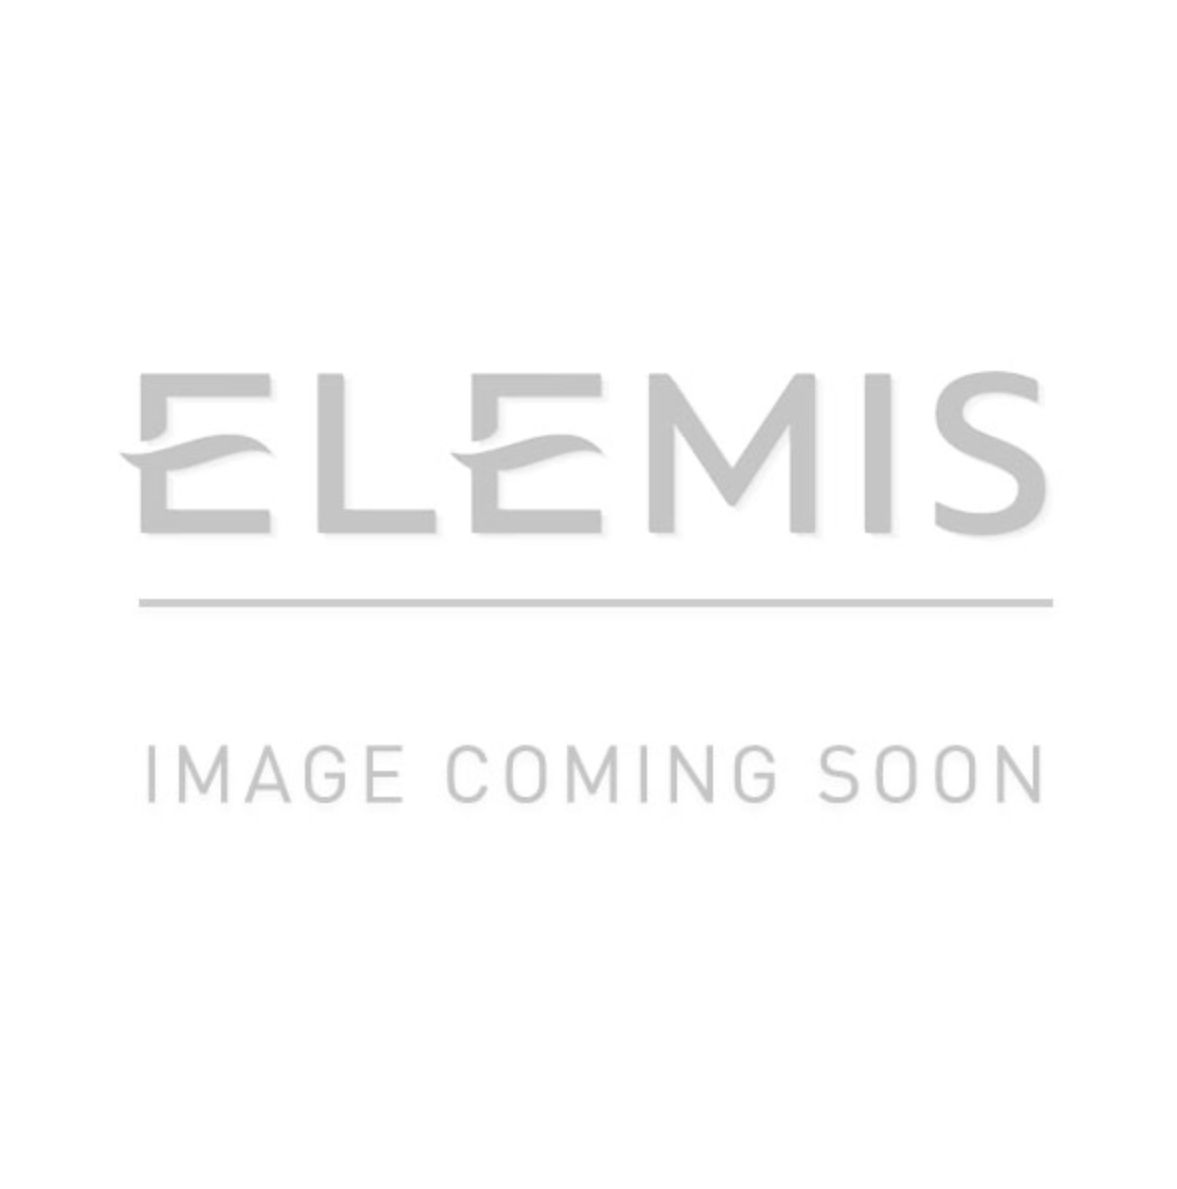 Pro-Collagen Cleansing Balm | Elemis UK